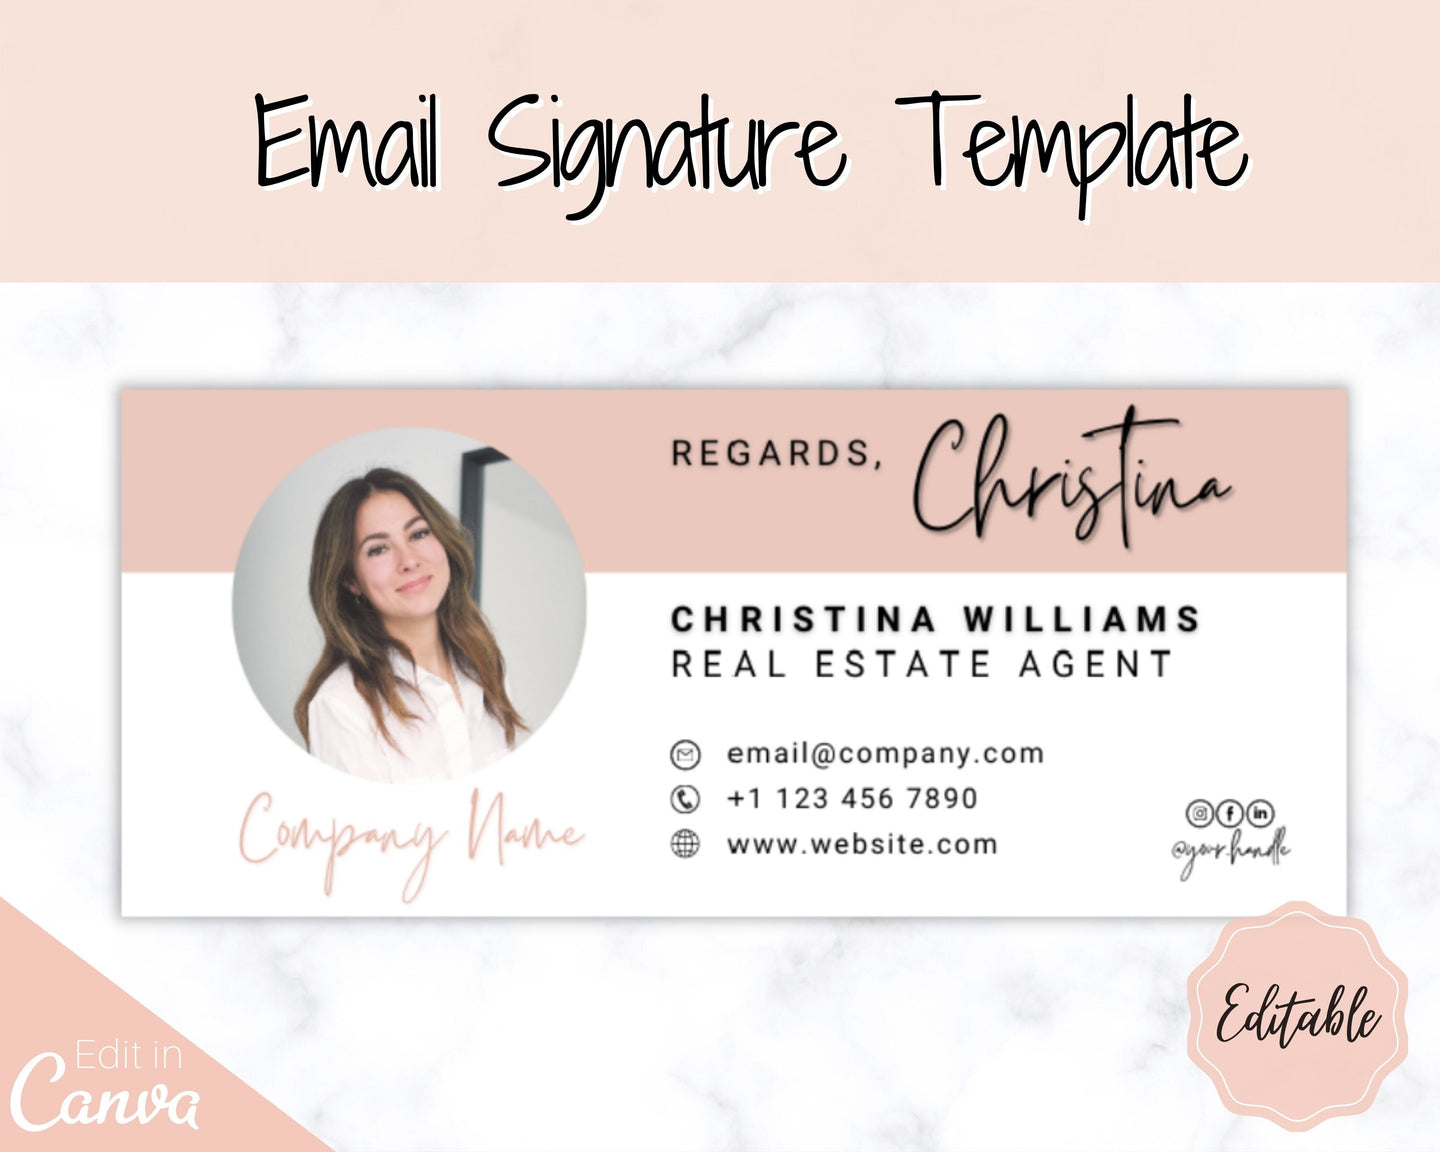 Email Signature Template with logo & photo! Editable Canva Signature Design. Minimalist, Realtor Marketing, Real Estate, Professional, Gmail | Style 15